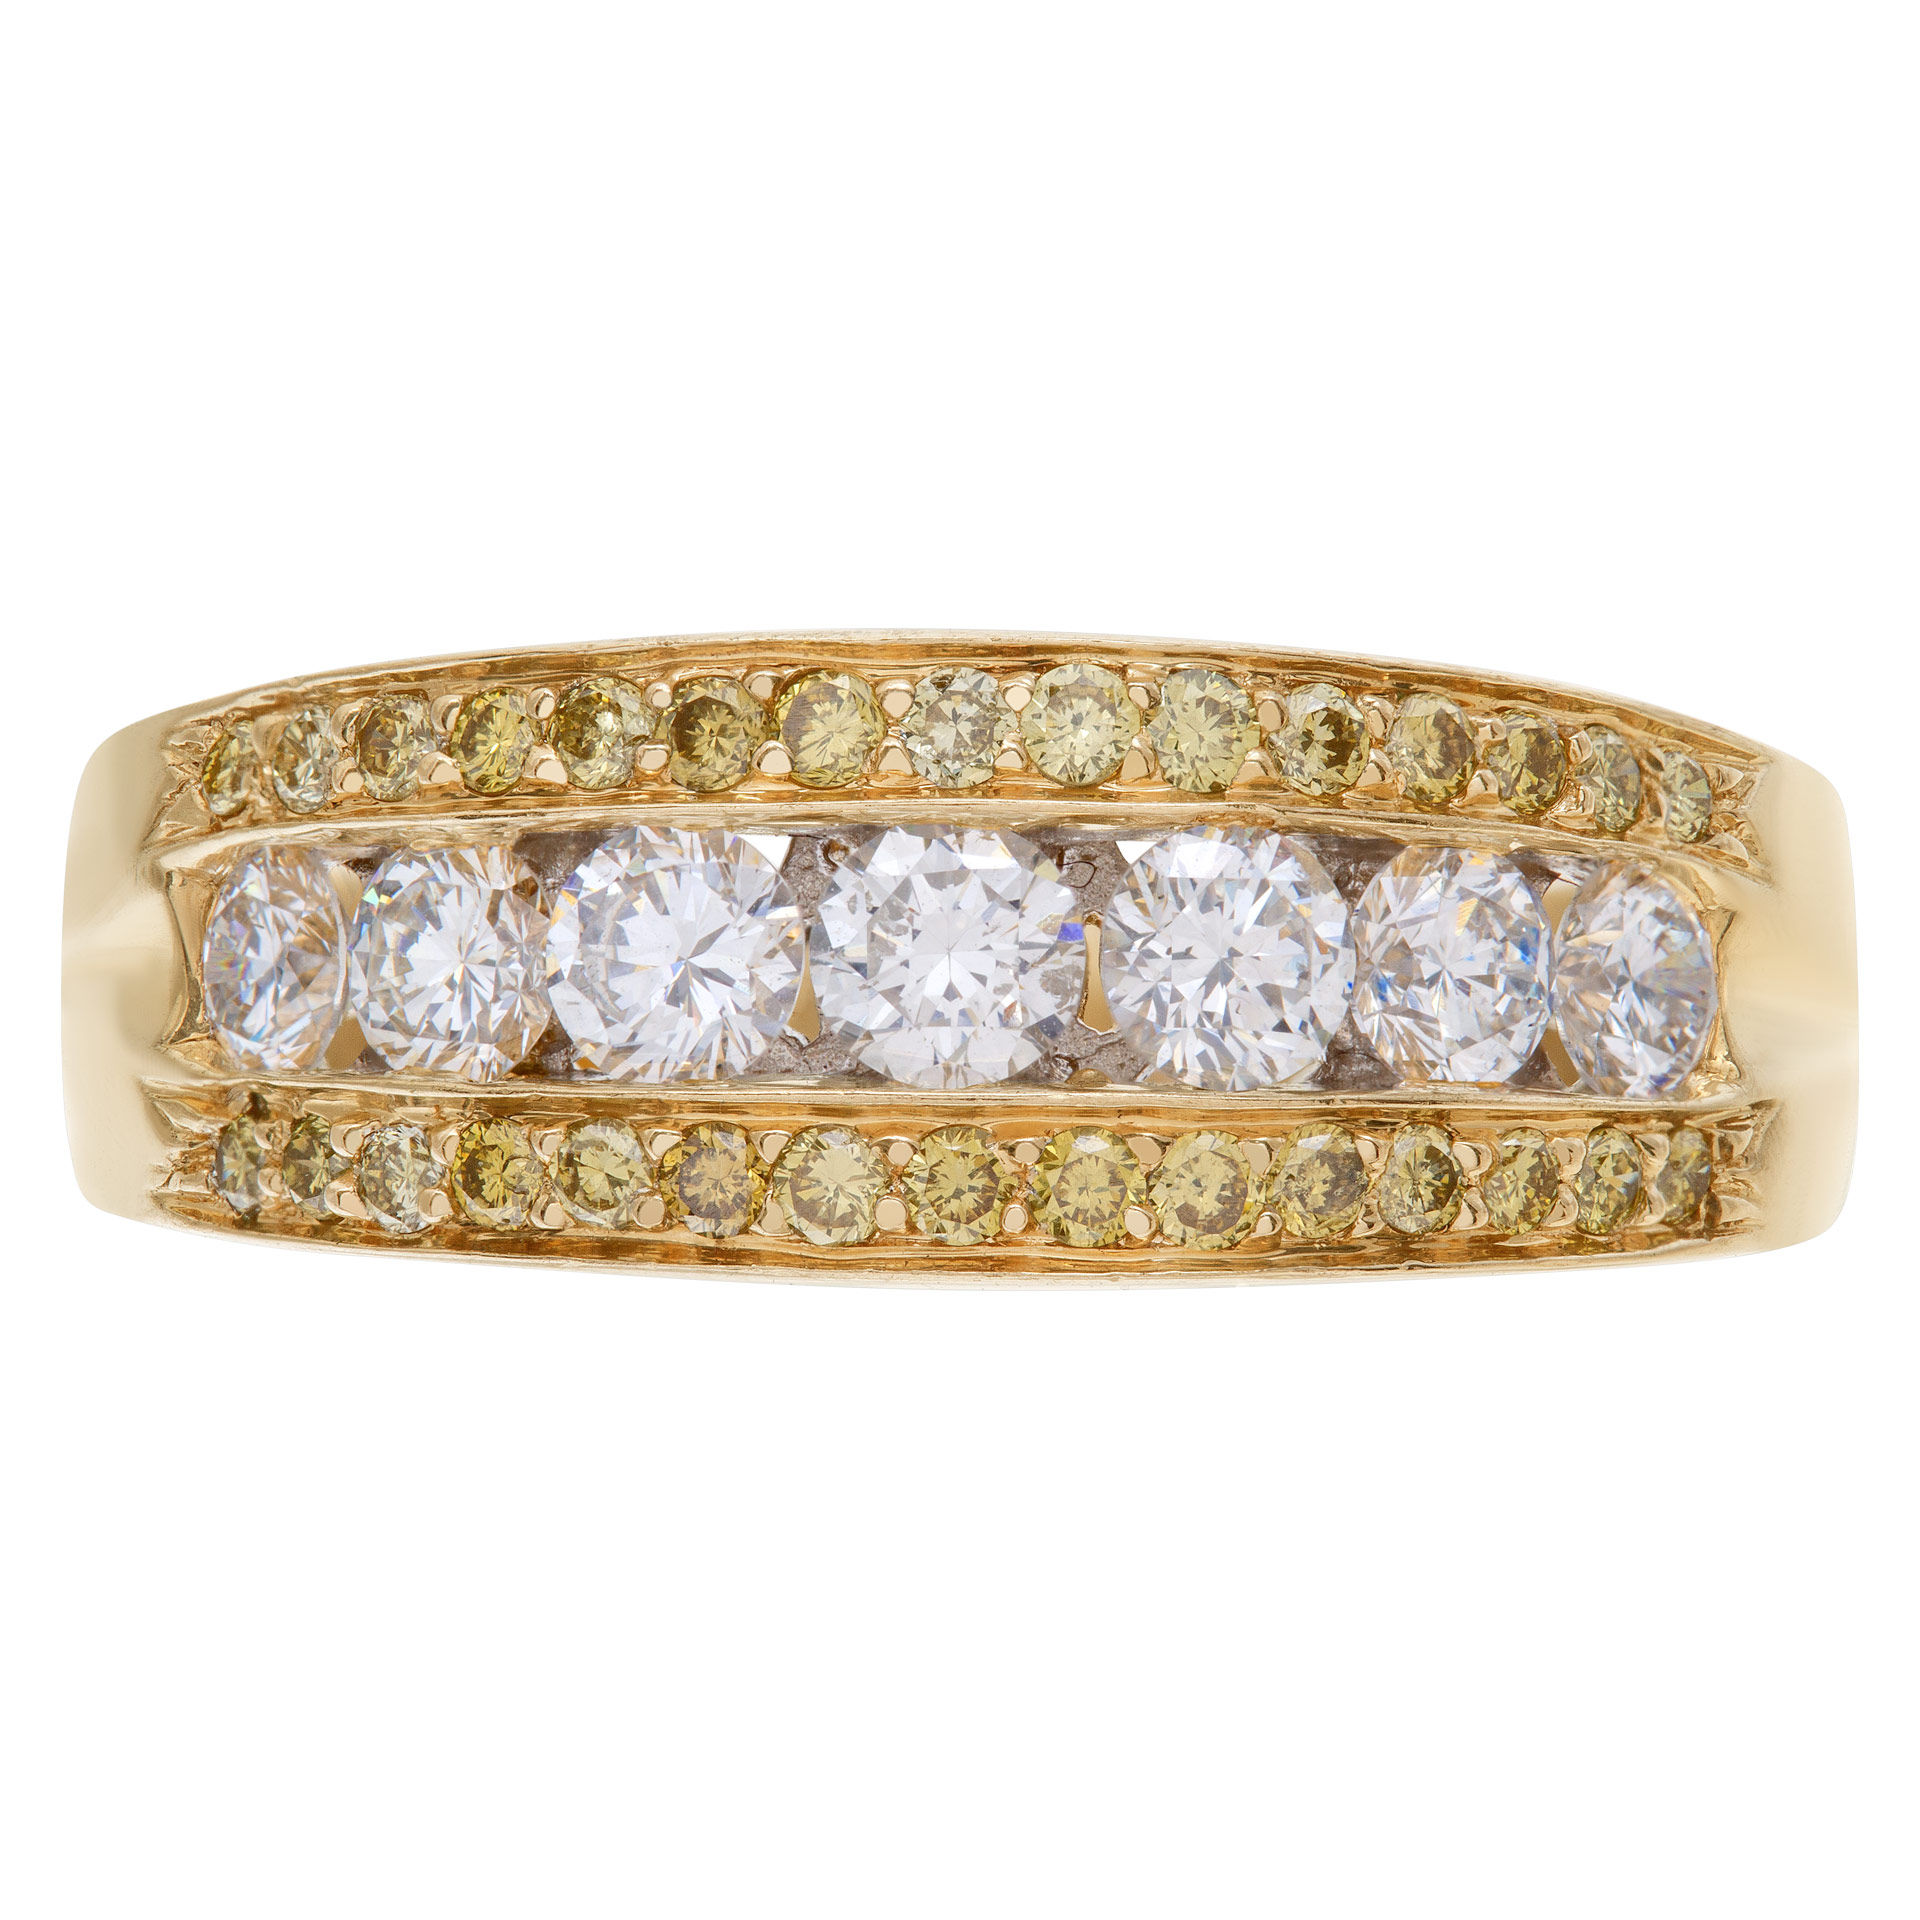 Exquisite Diamond wedding ring with 7 full cut round brilliants diamonds set in 14K yellow gold.